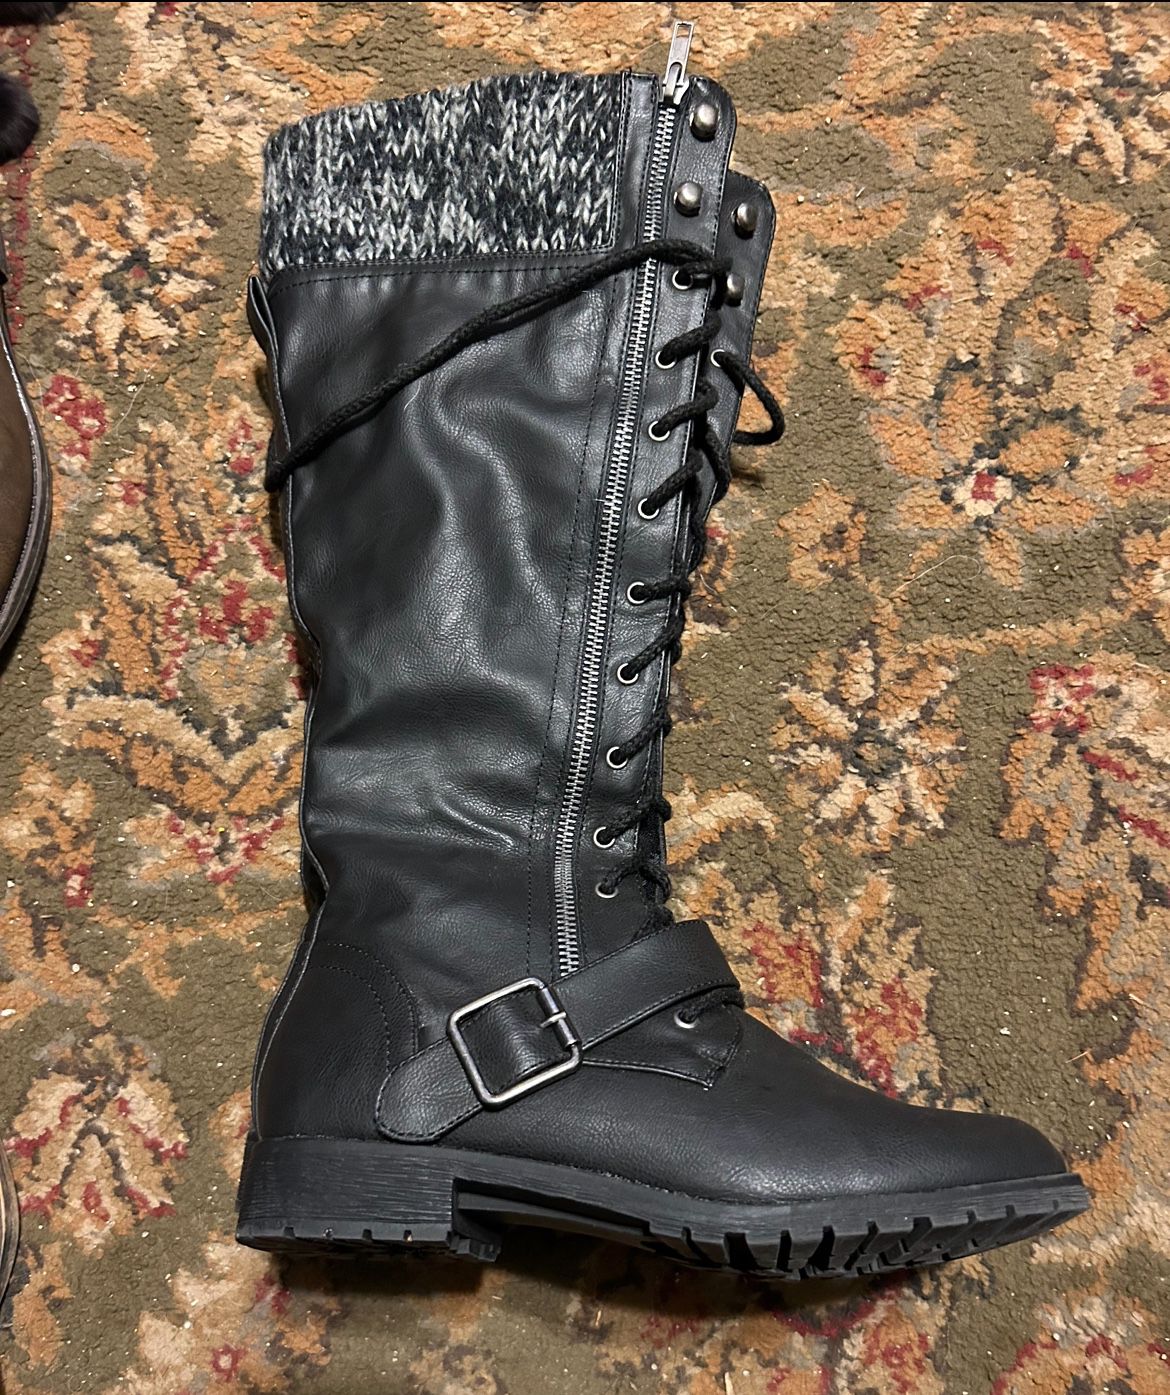 Black Boots Size 6.5 (Ladies)